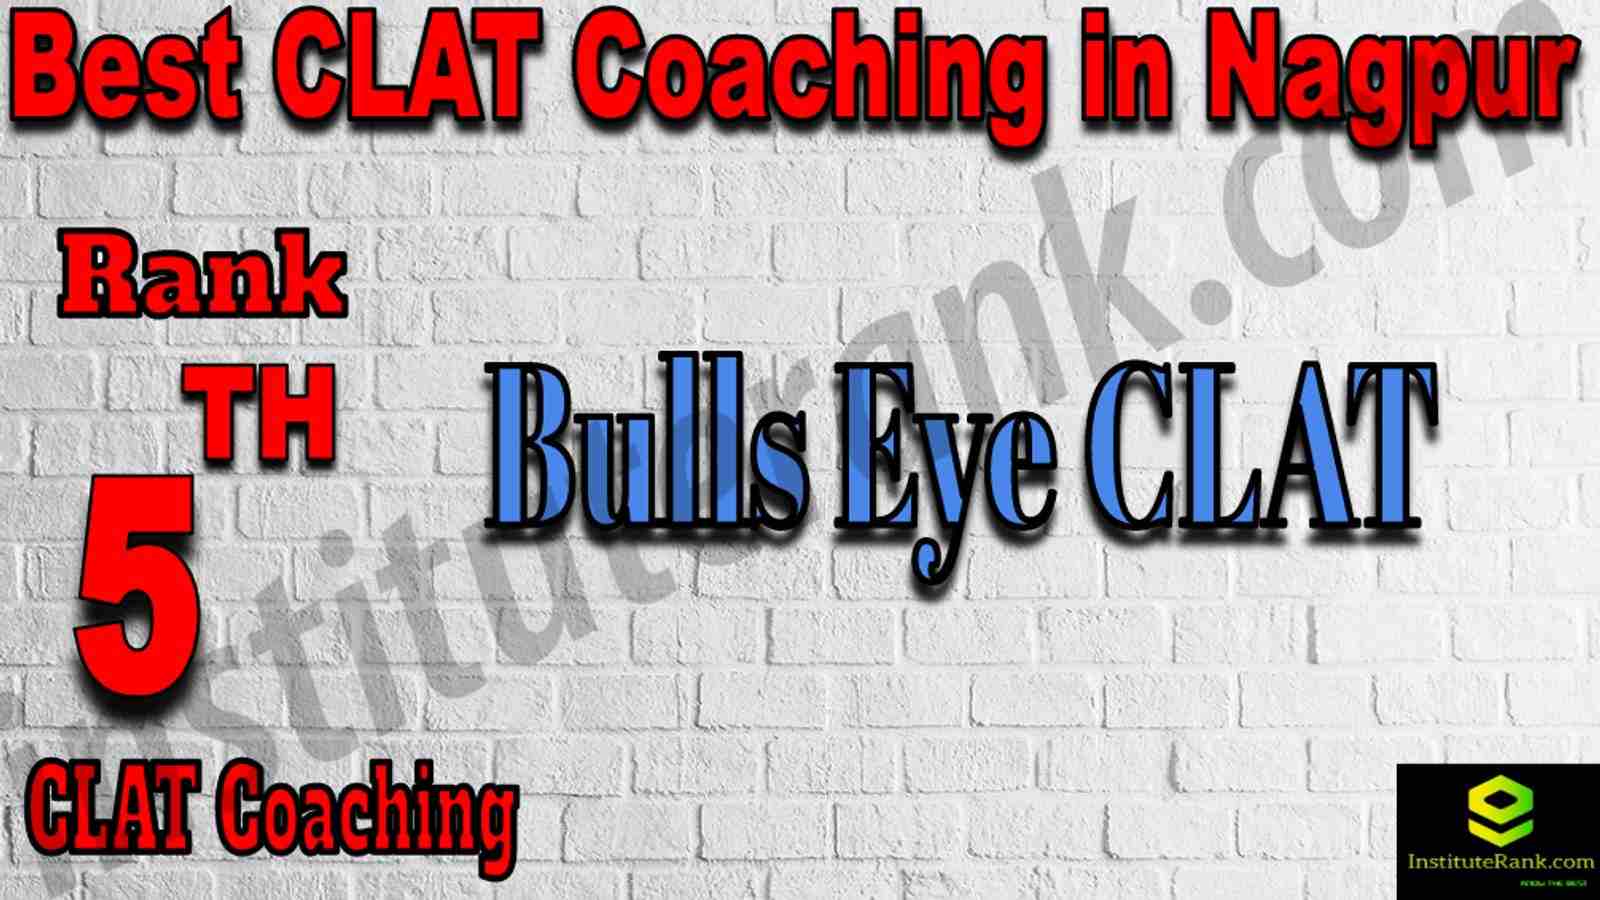 5th Best CLAT Coaching in Nagpur